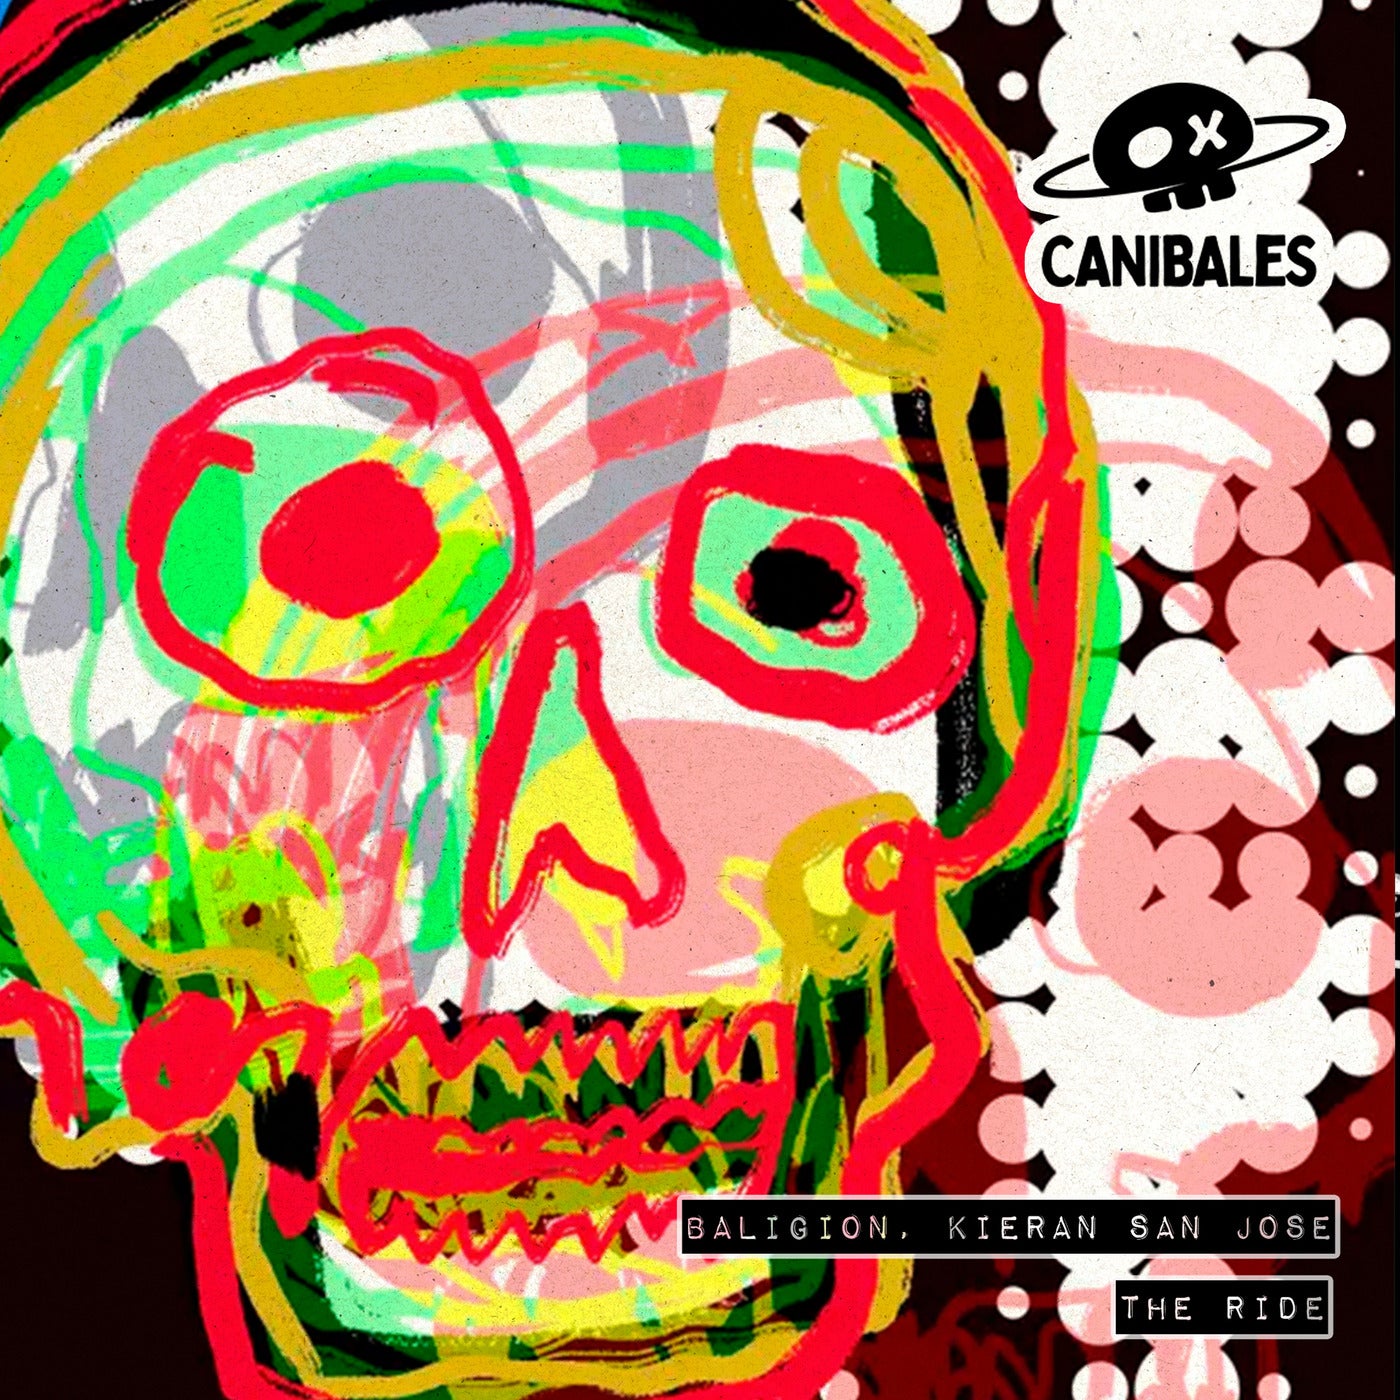 image cover: Baligion, Kieran San Jose - The Ride on CANIBALES